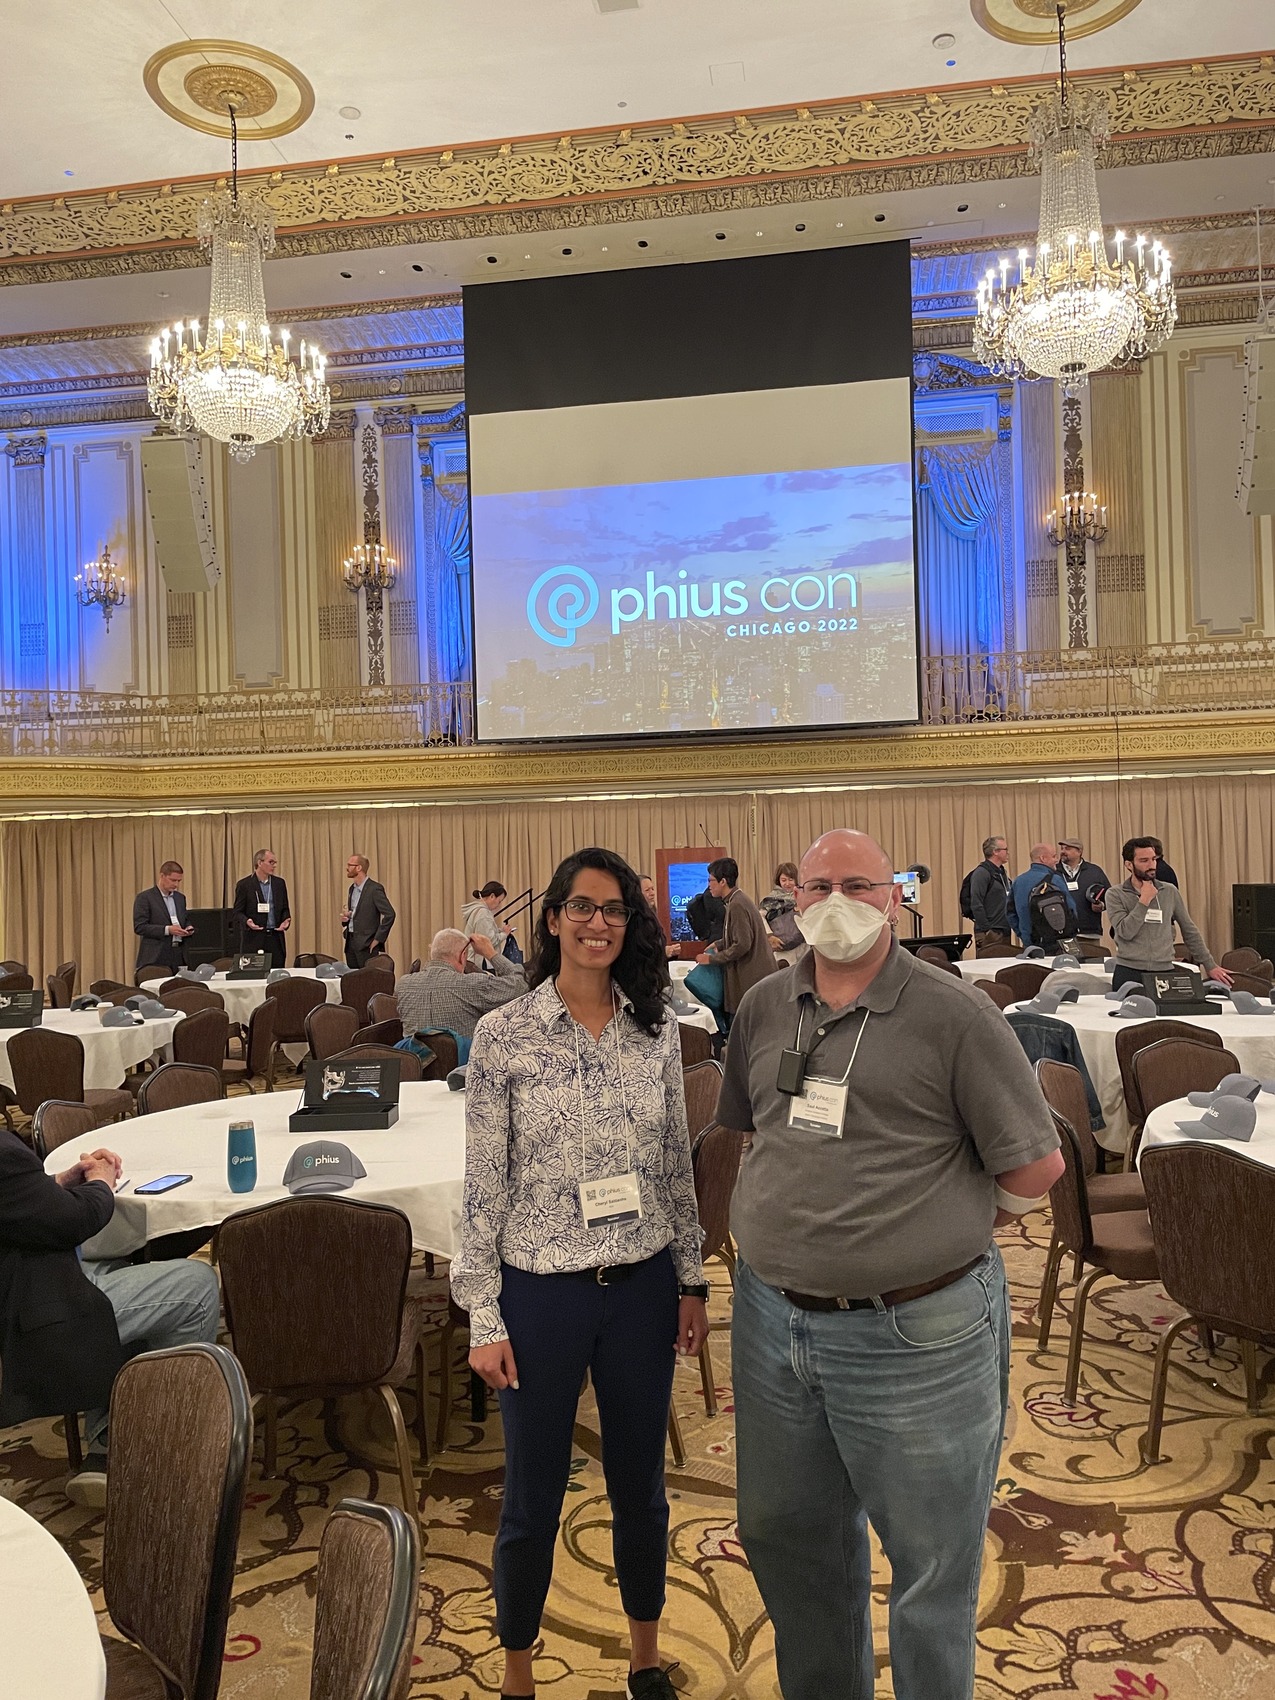 Cheryl Saldanha and Saul Accetta at PhiusCon 2022